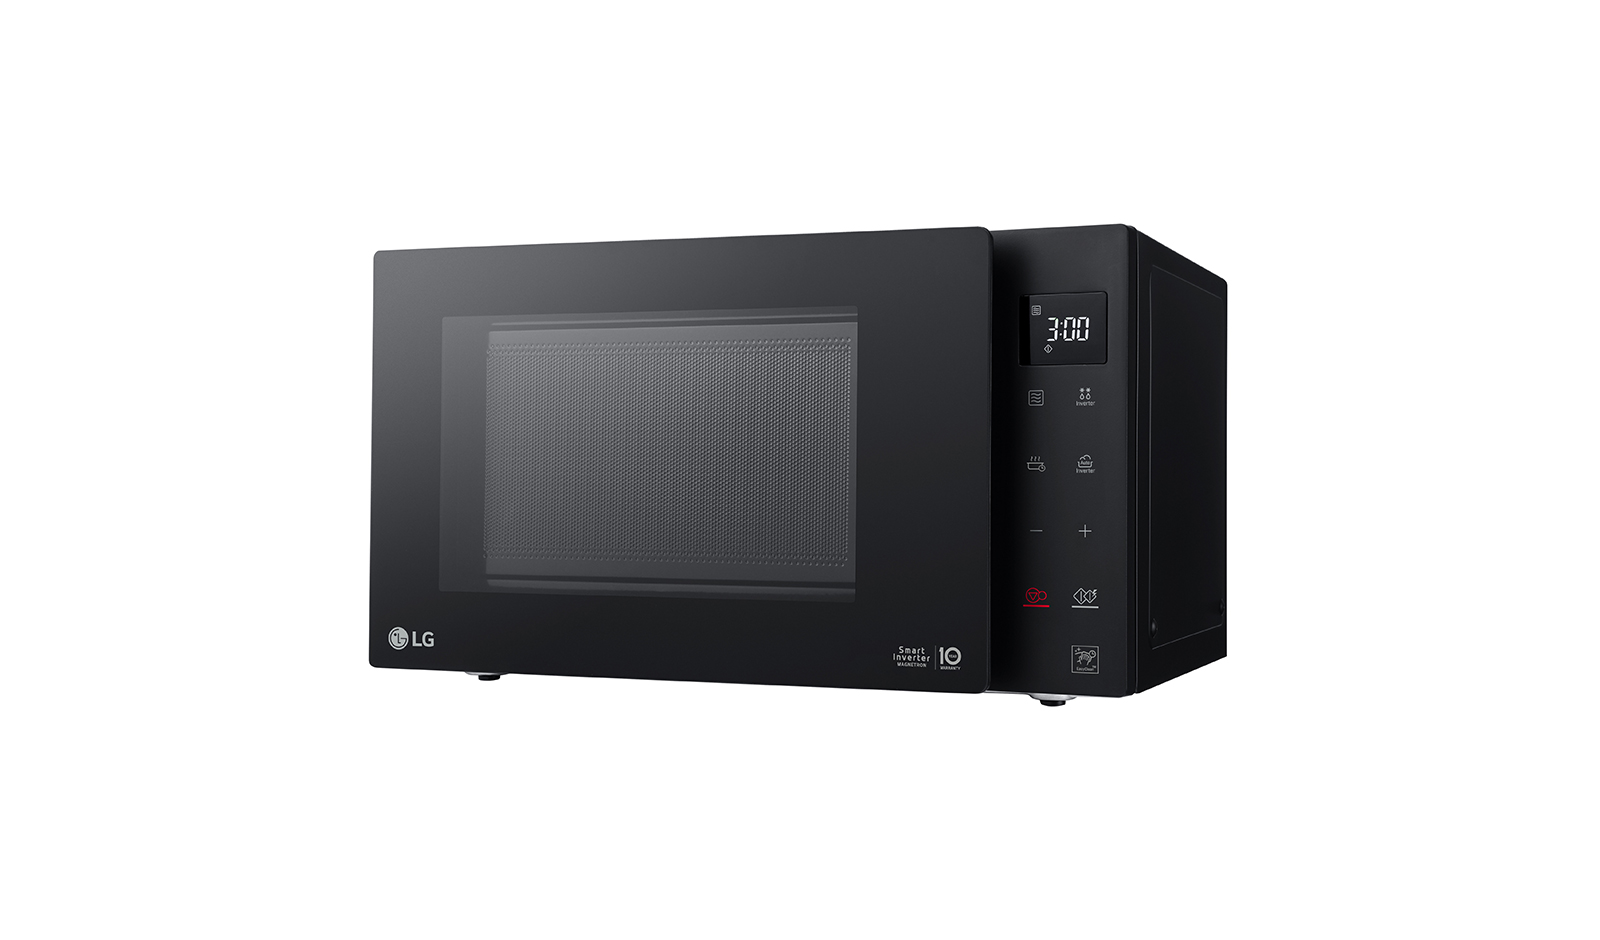 LG Microwave 23L MS2336GIB - Appliance World